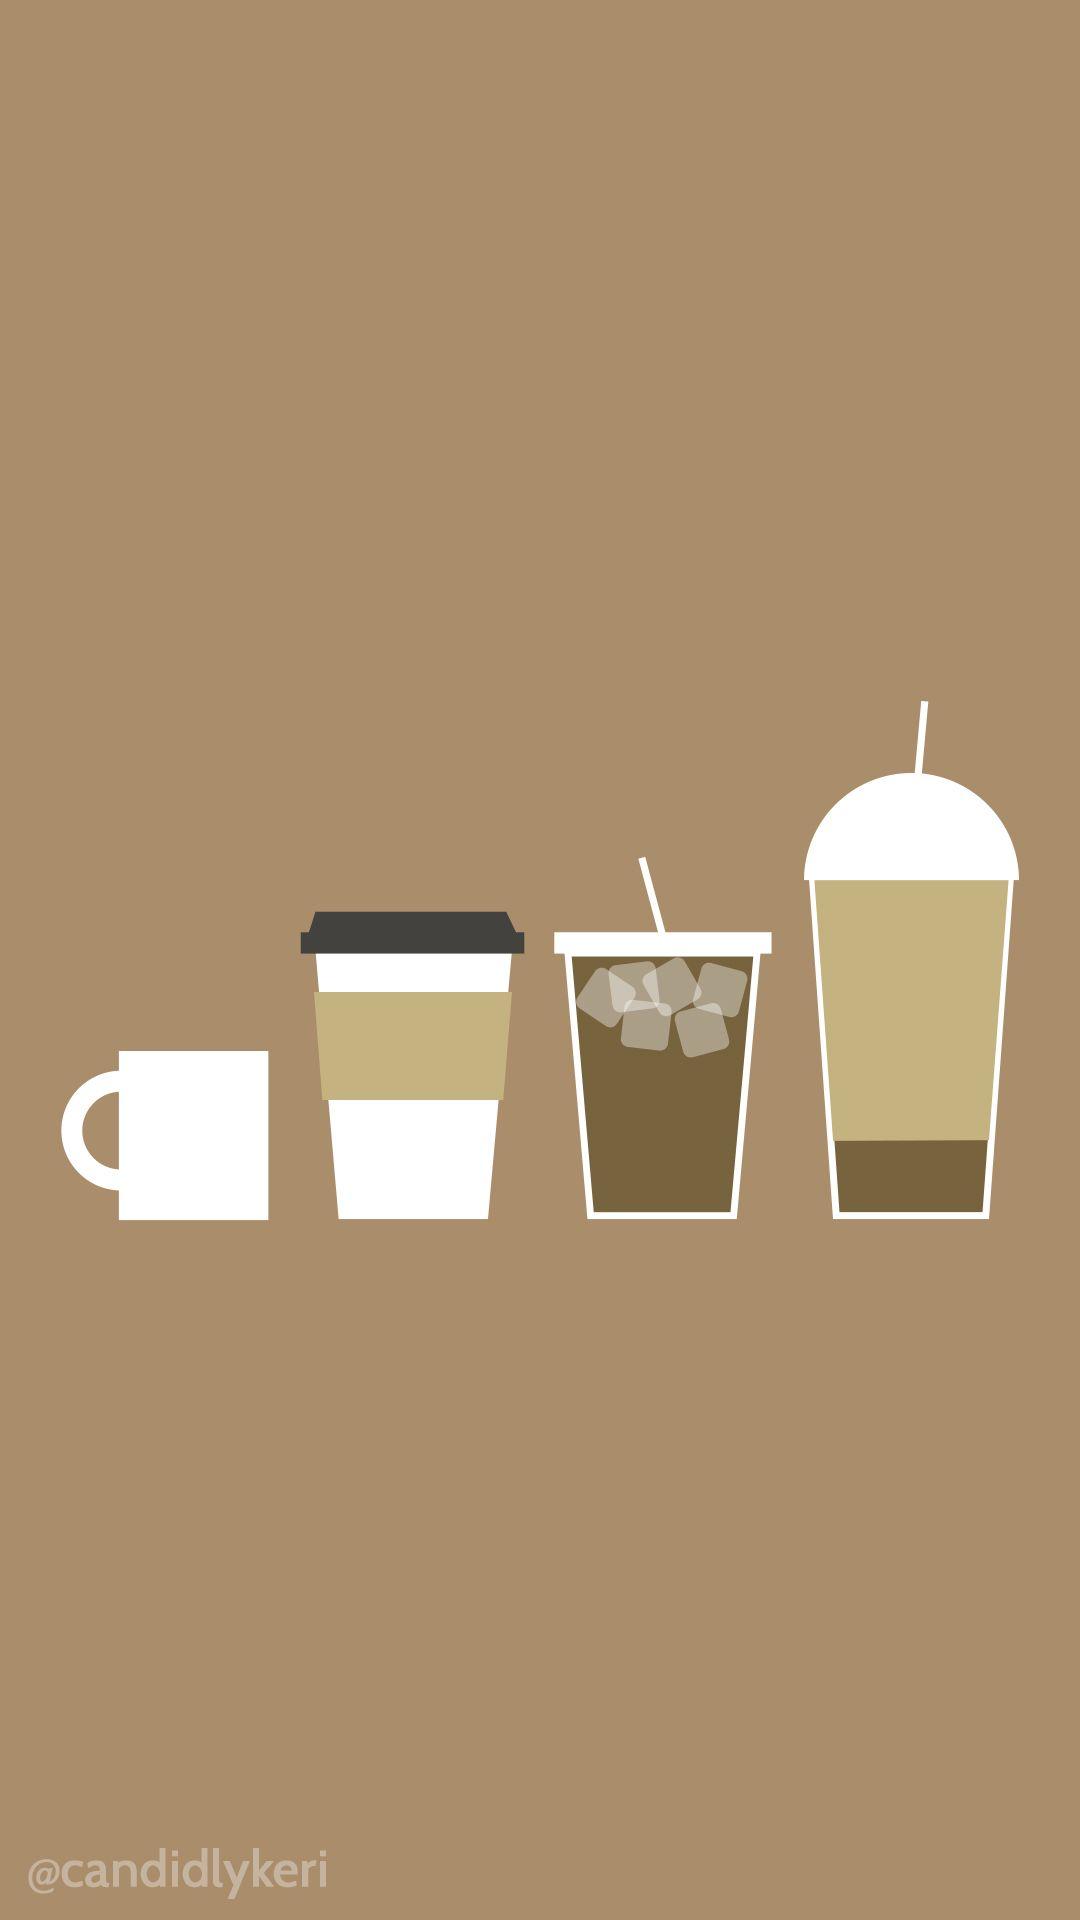 Free download Cute cartoon coffee latte iced coffee wallpaper you